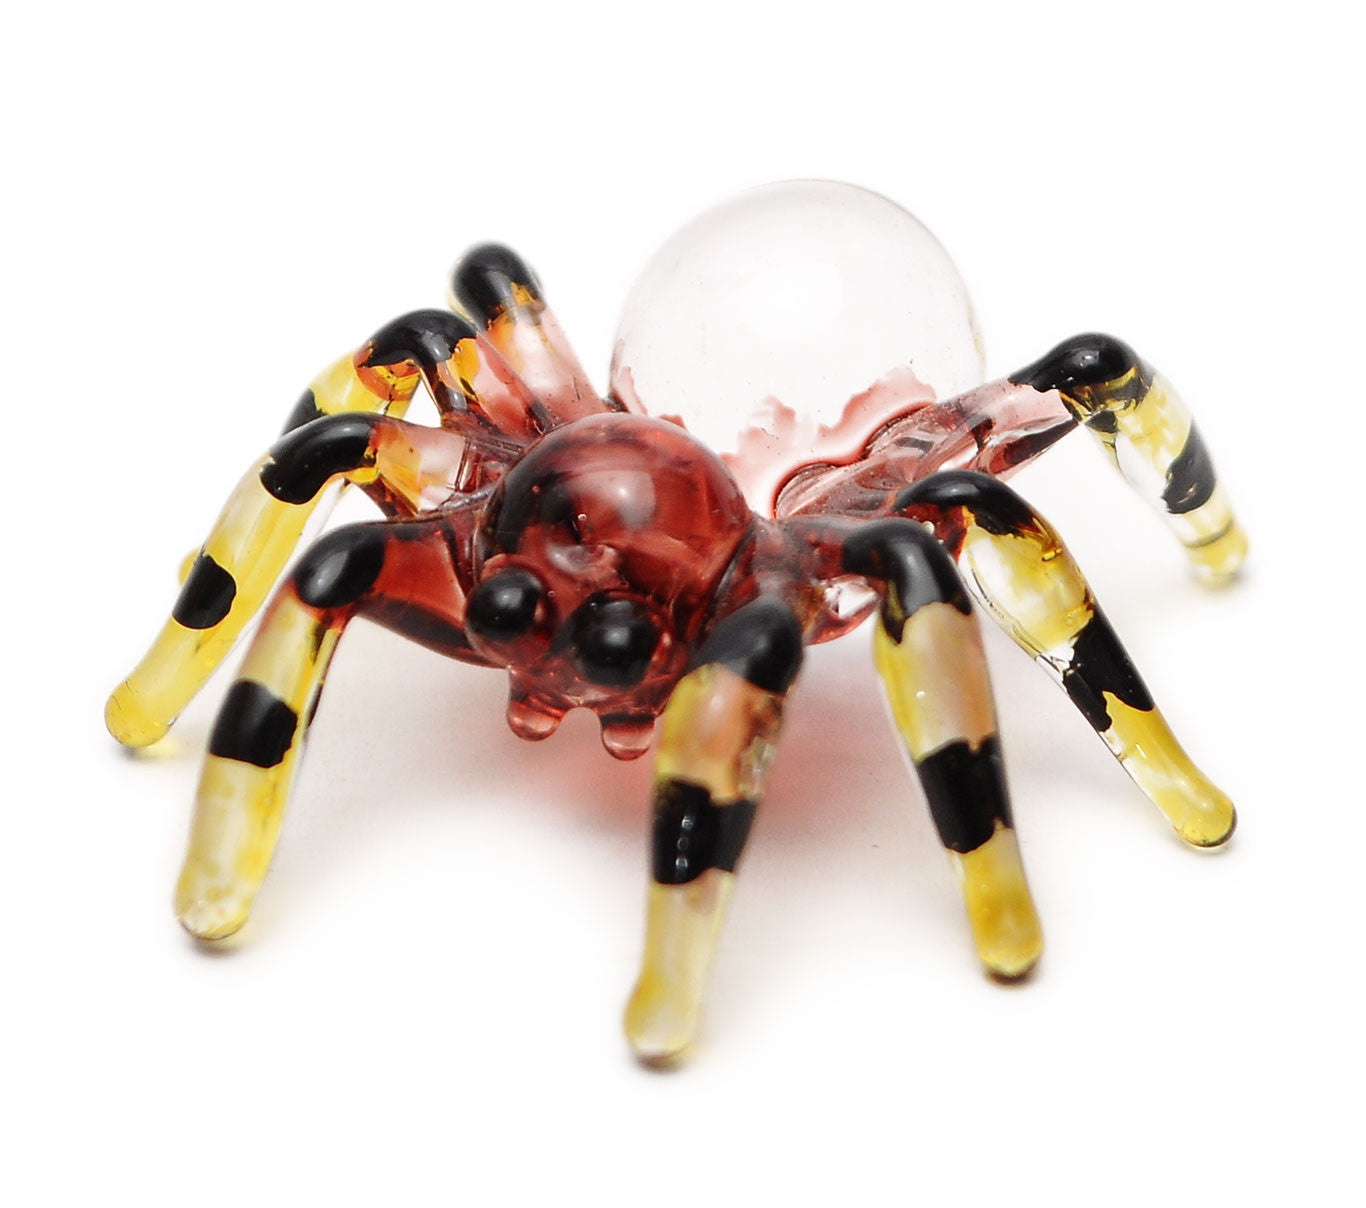 Spider Figurine Blown Glass Animal Figurine Black Hand Blown Art Insect Collectible Halloween Decor